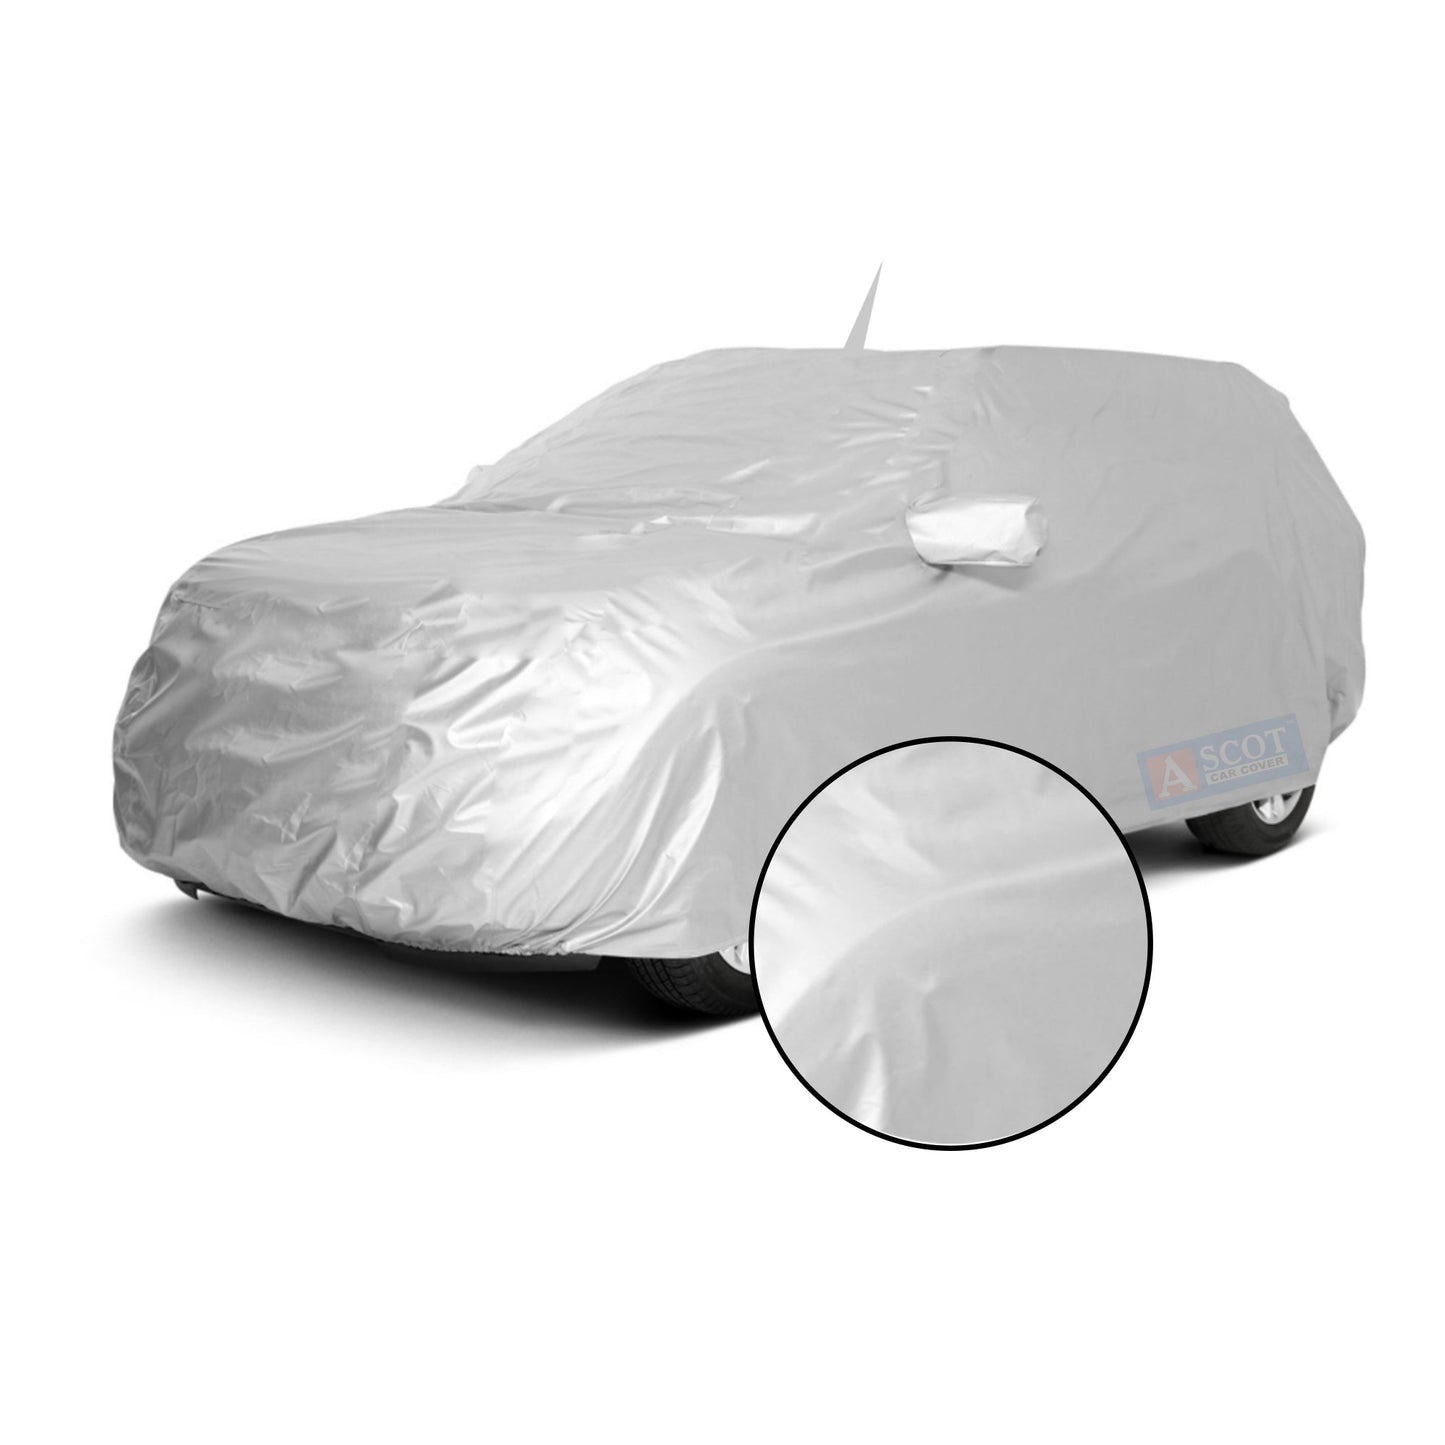 Ascot Mahindra E-Verito Car Body Cover Dust Proof, Trippel Stitched